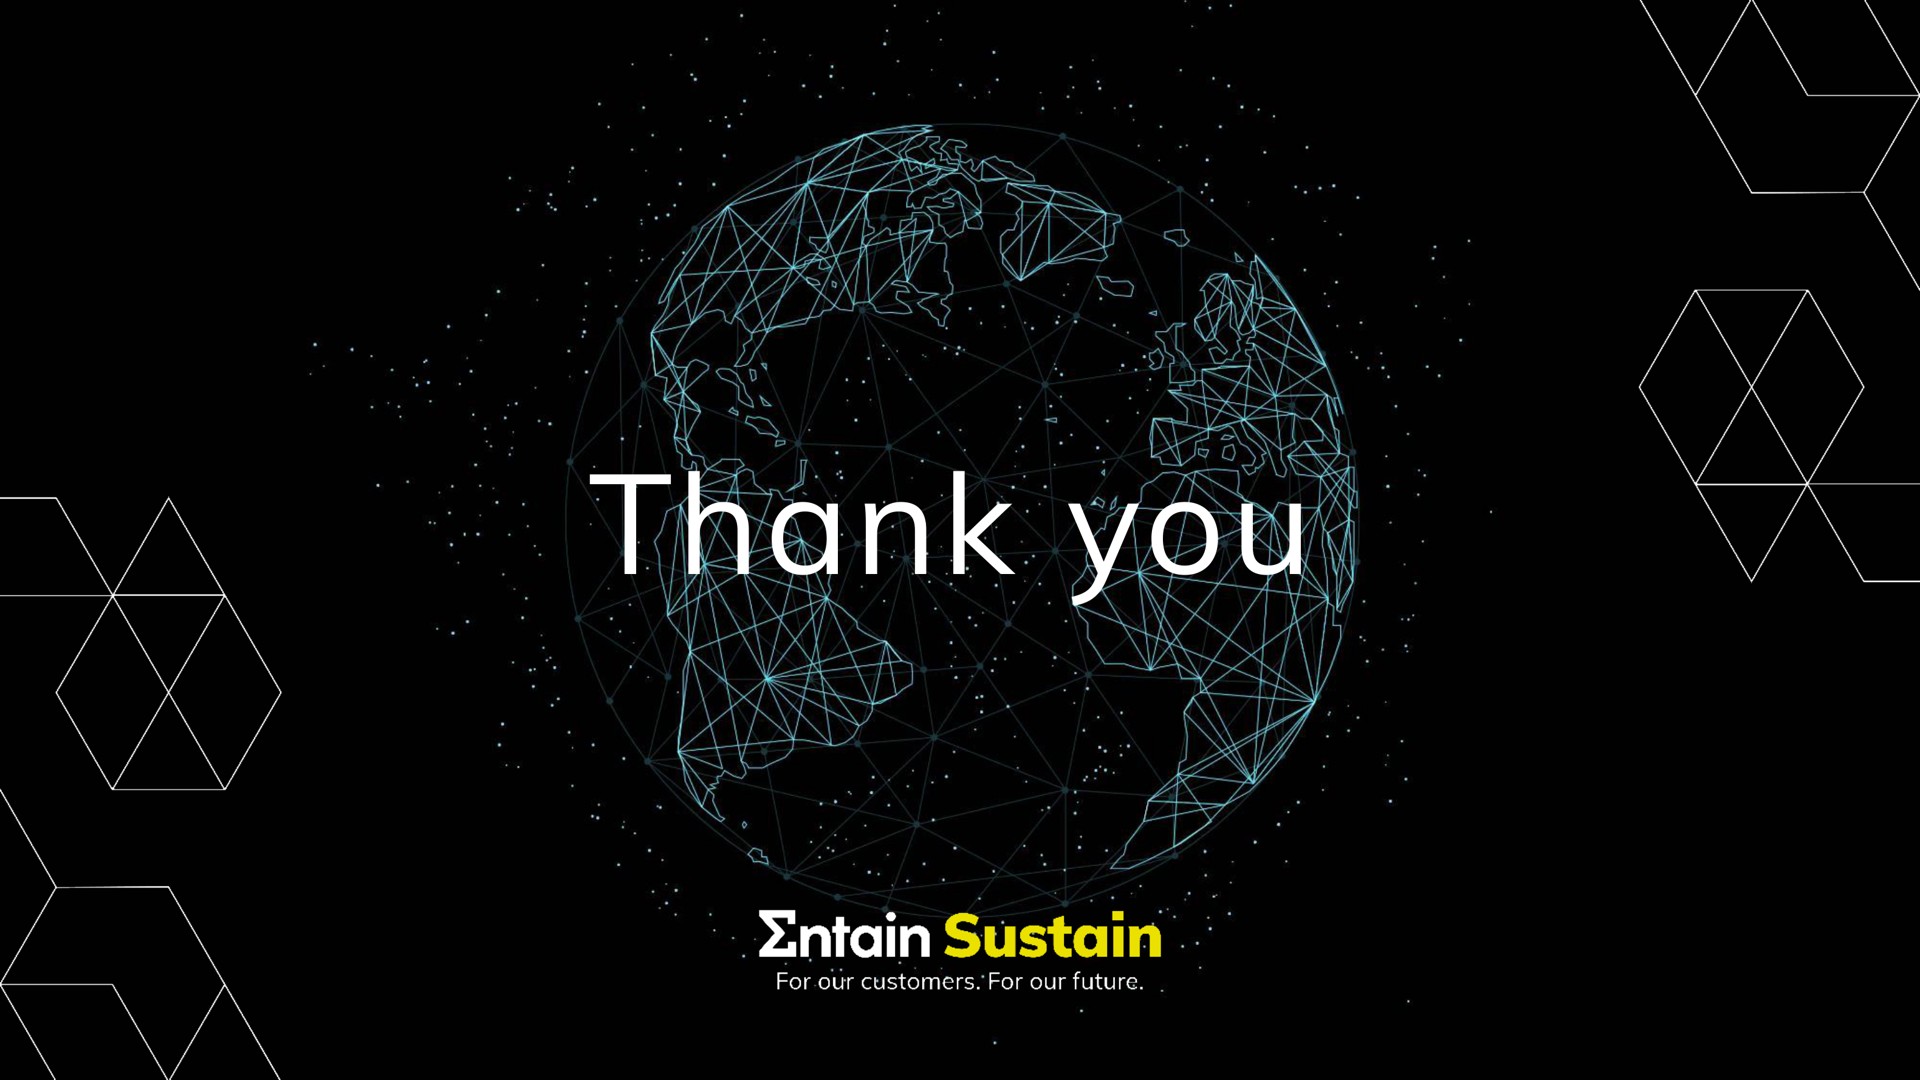 thank you | Entain Group